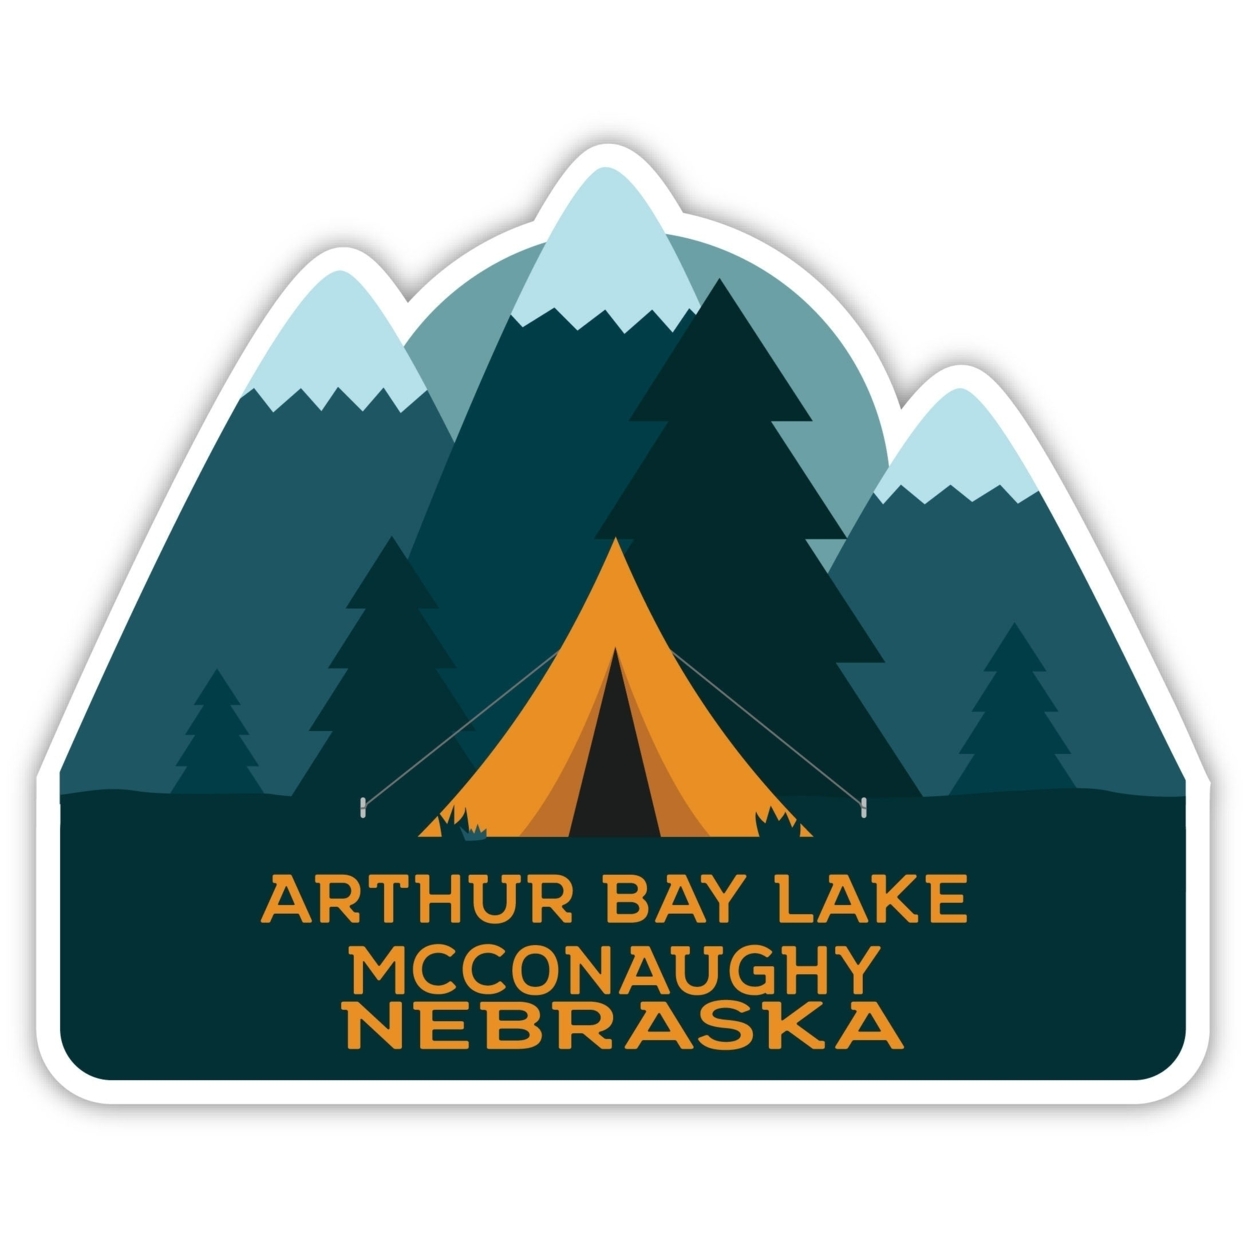 Arthur Bay Lake Mcconaughy Nebraska Souvenir Decorative Stickers (Choose Theme And Size) - 4-Pack, 4-Inch, Tent